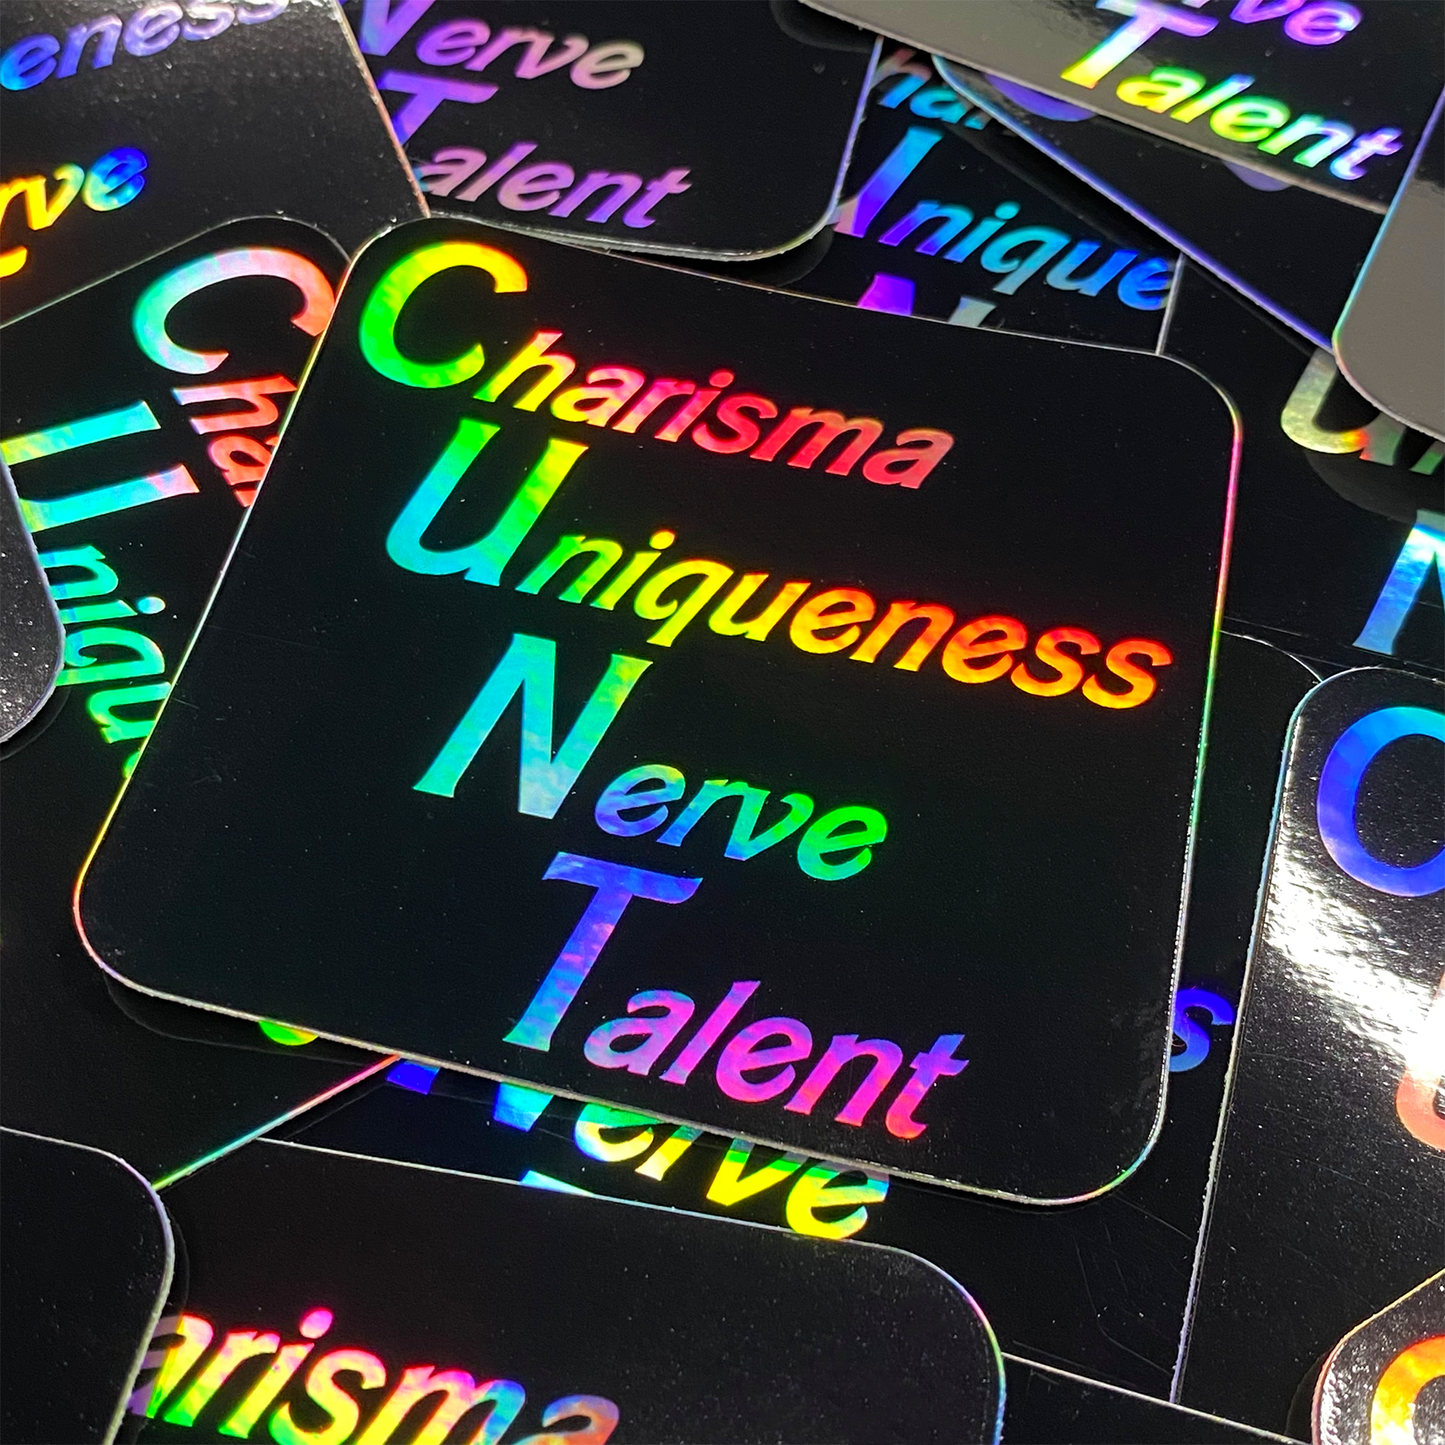 Charisma, Uniqueness, Nerve & Talent Sticker